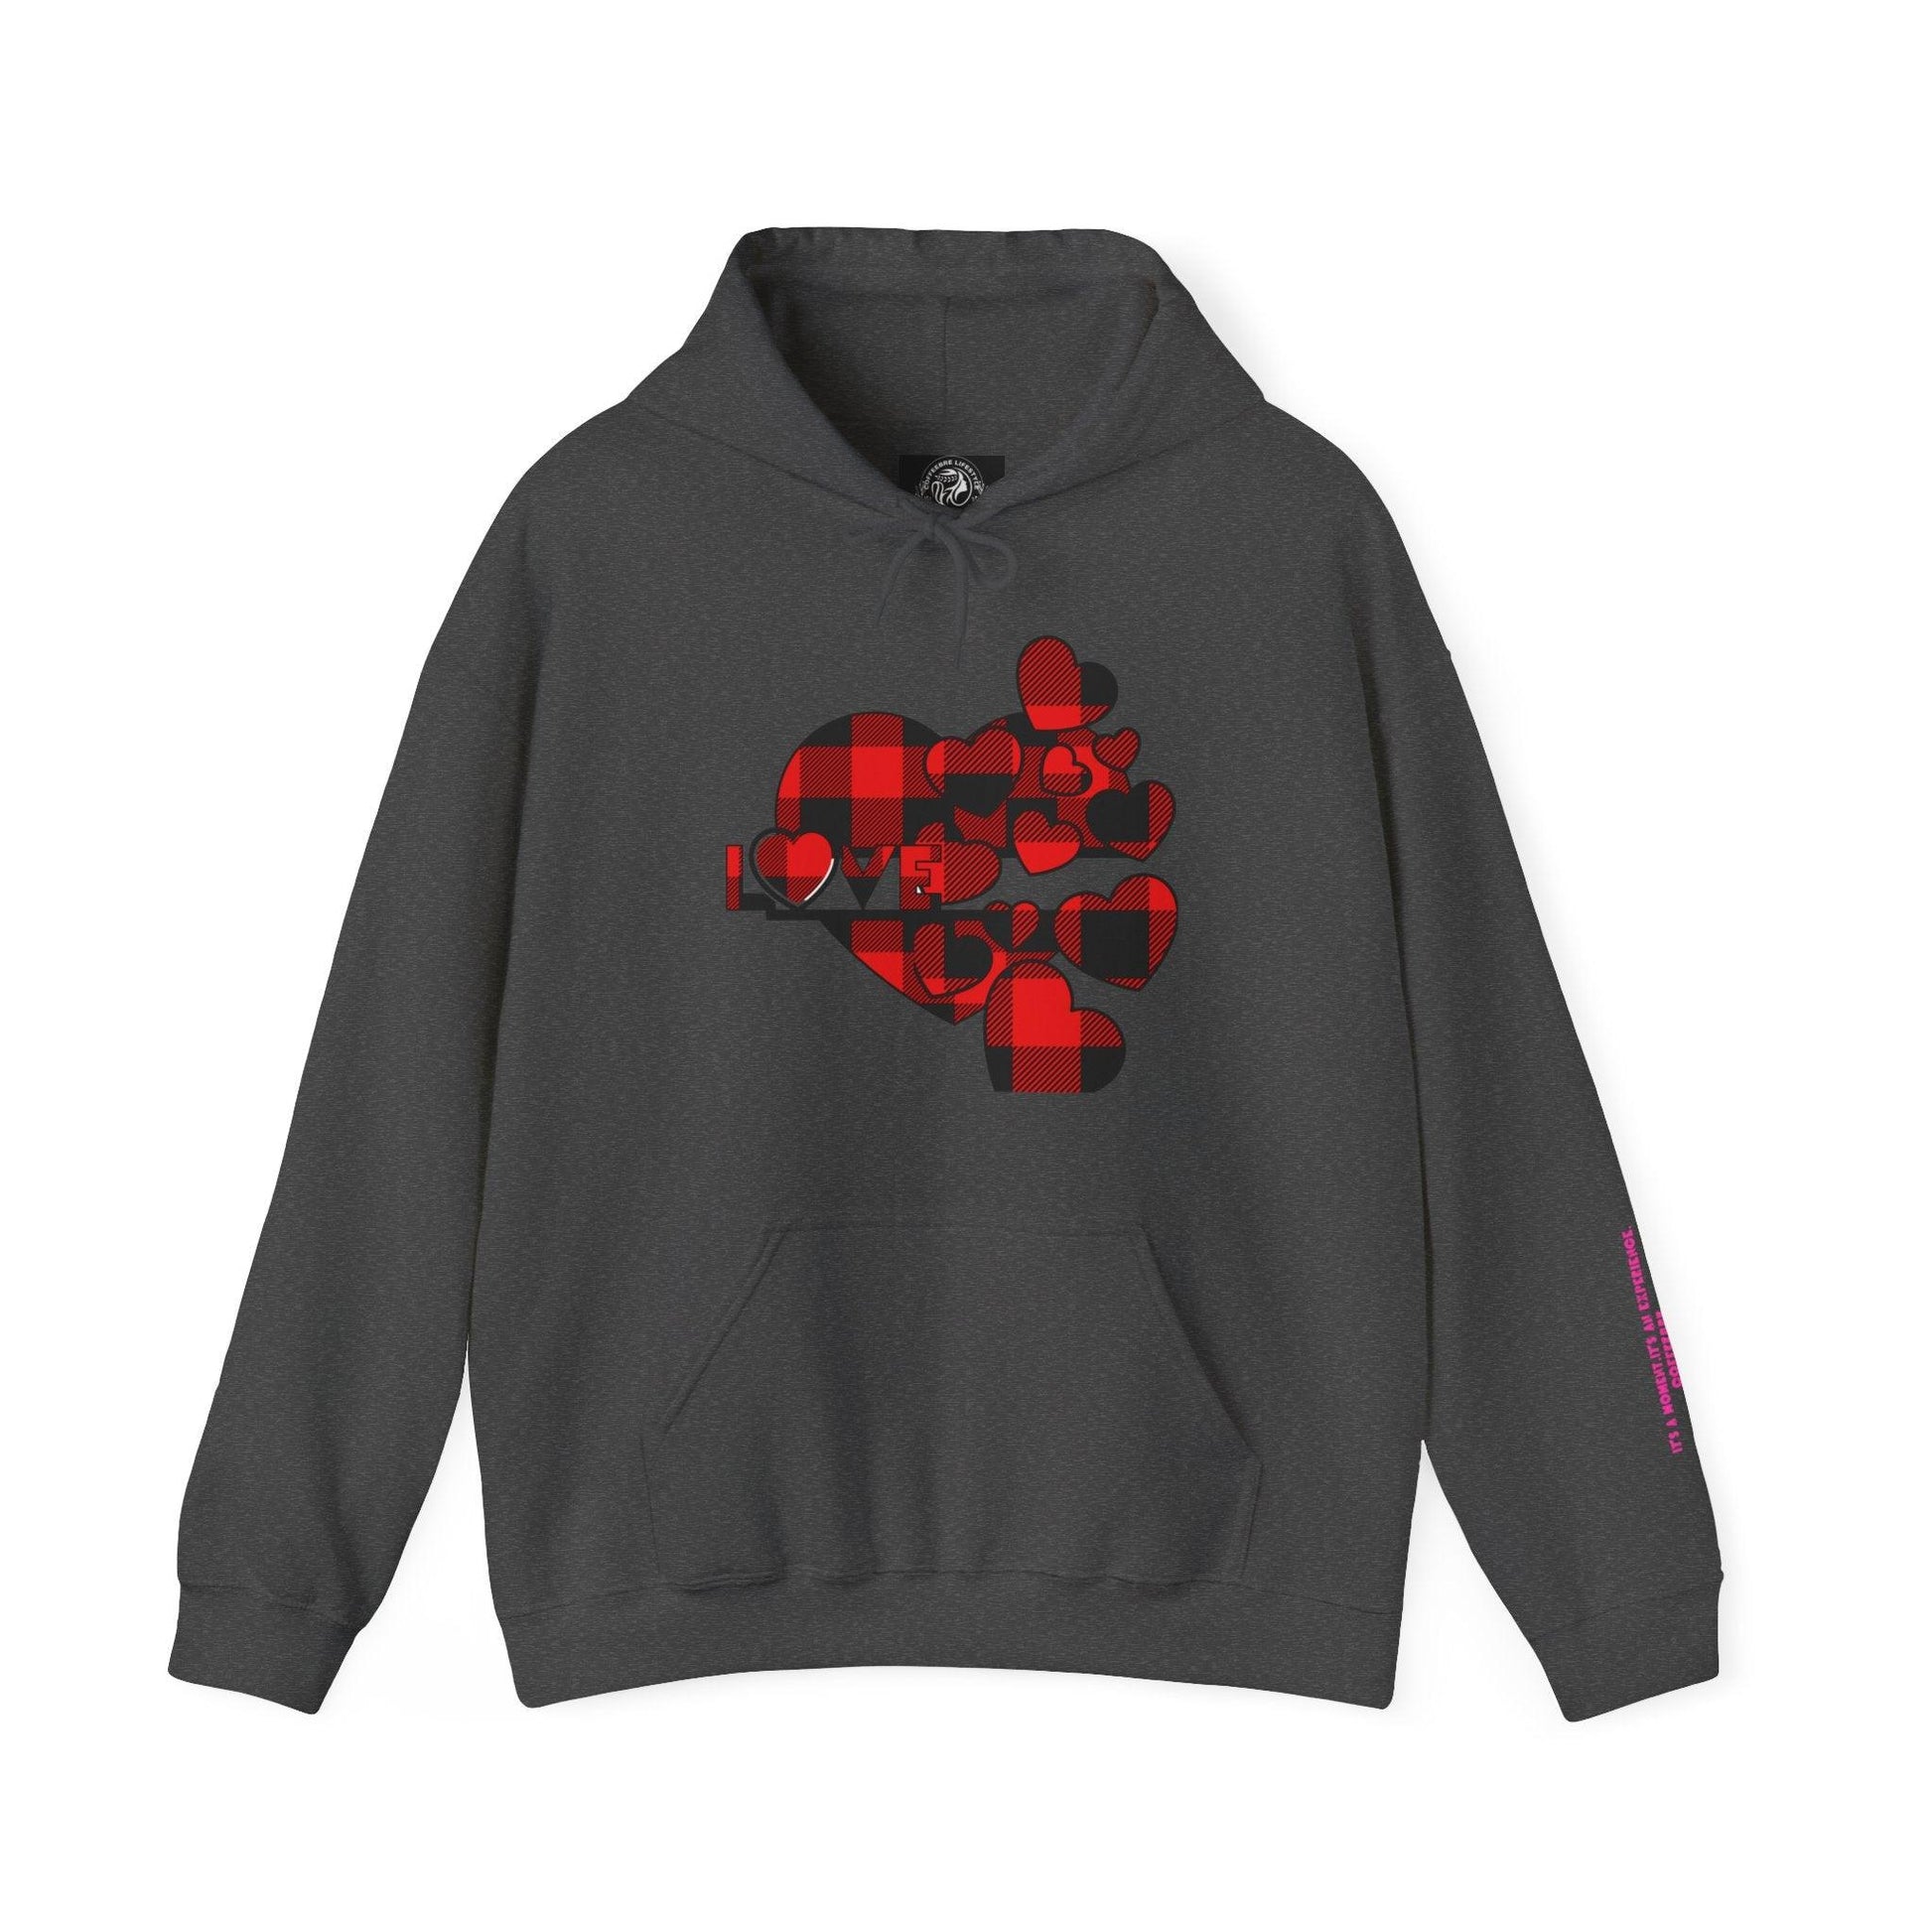 Checkered Heart Hooded Sweatshirt - COFFEEBRE